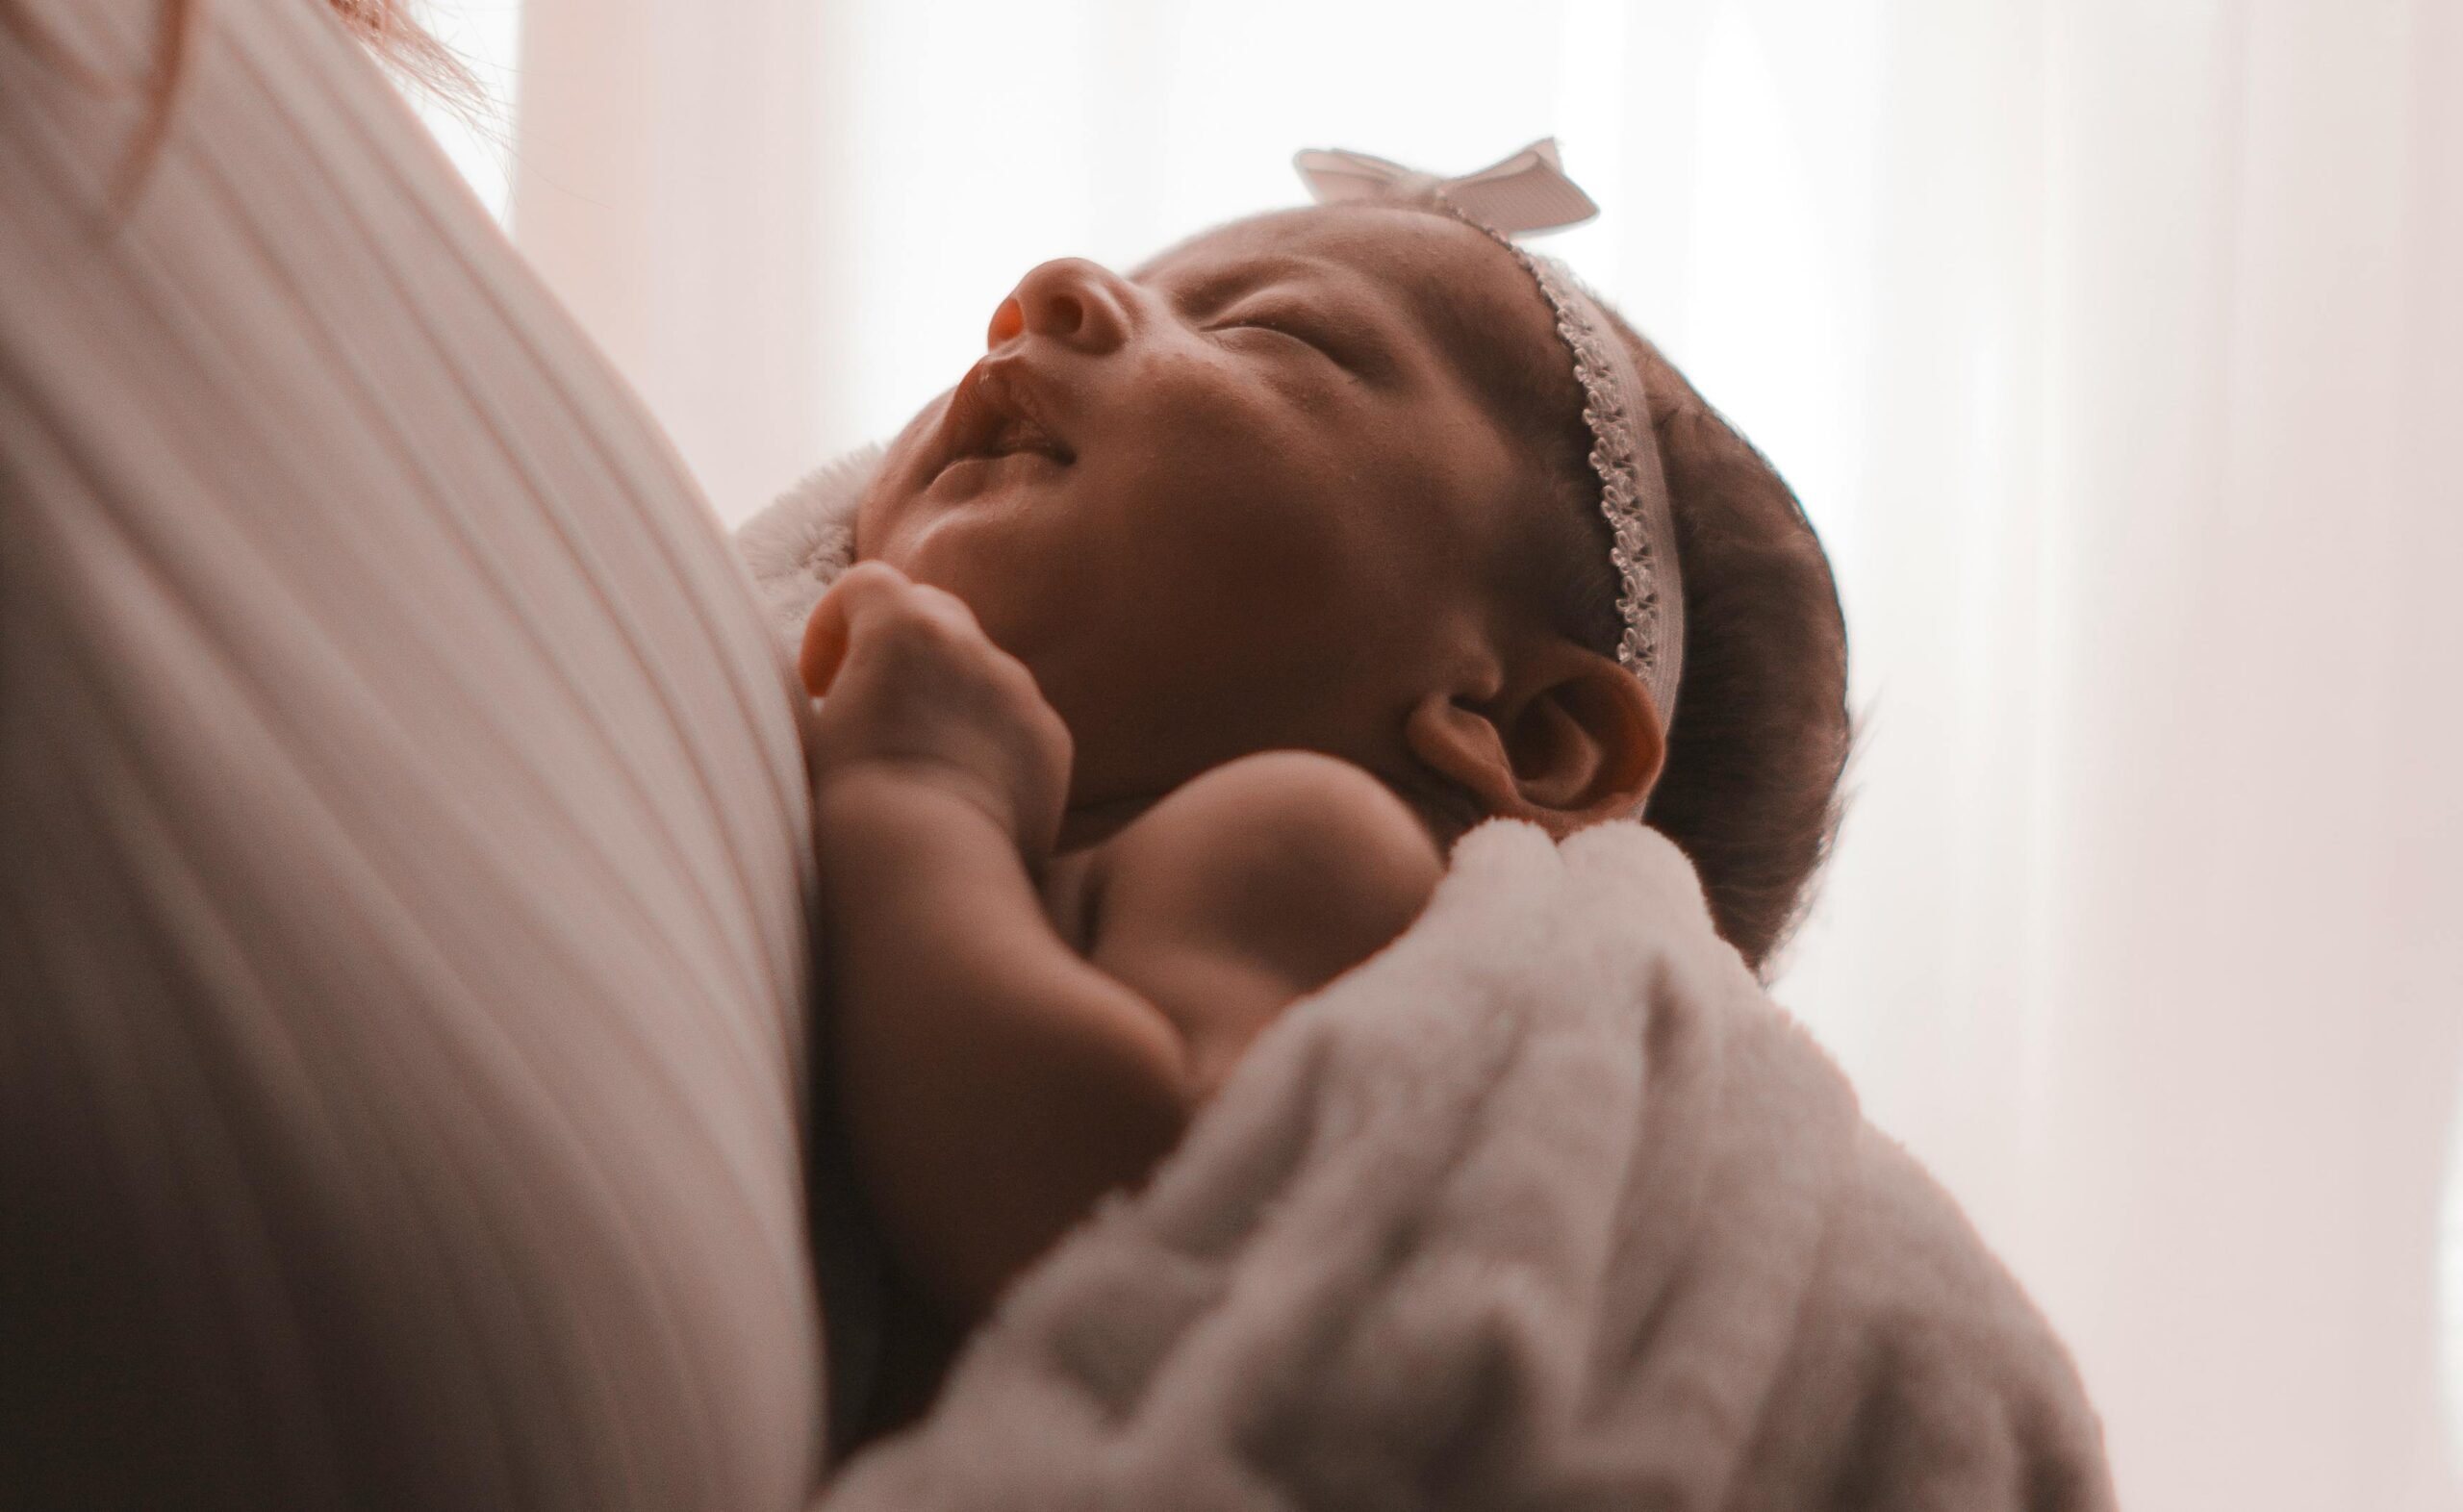 Newborn Grunting in Sleep Blog | The Peaceful Sleeper